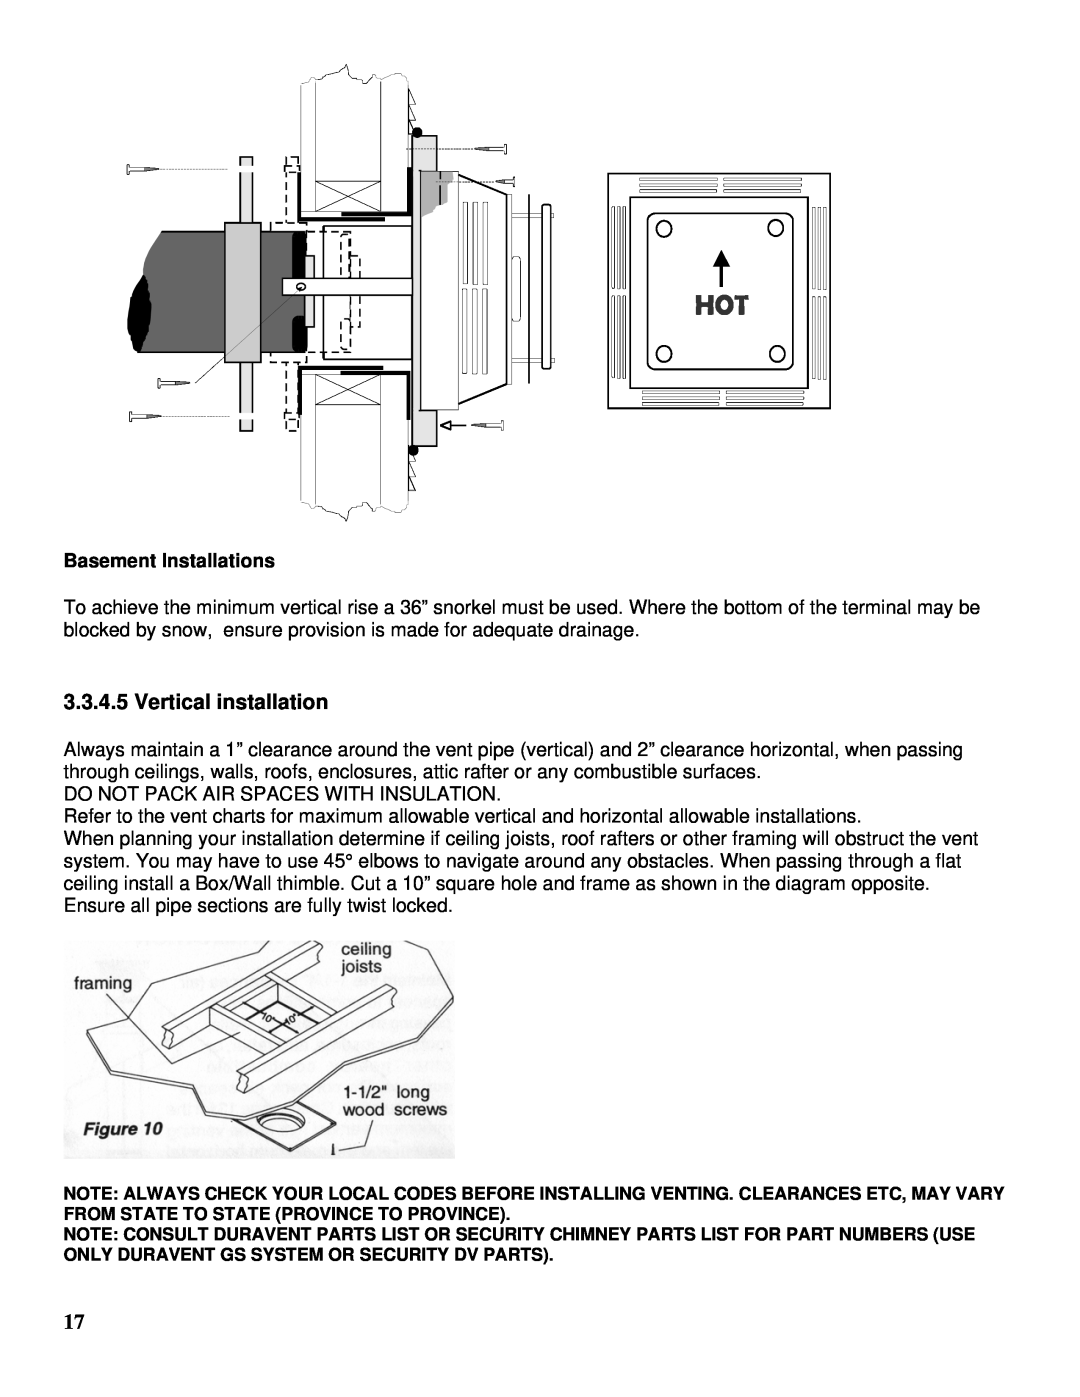 Drolet GTX-I manual Vertical installation, Basement Installations 